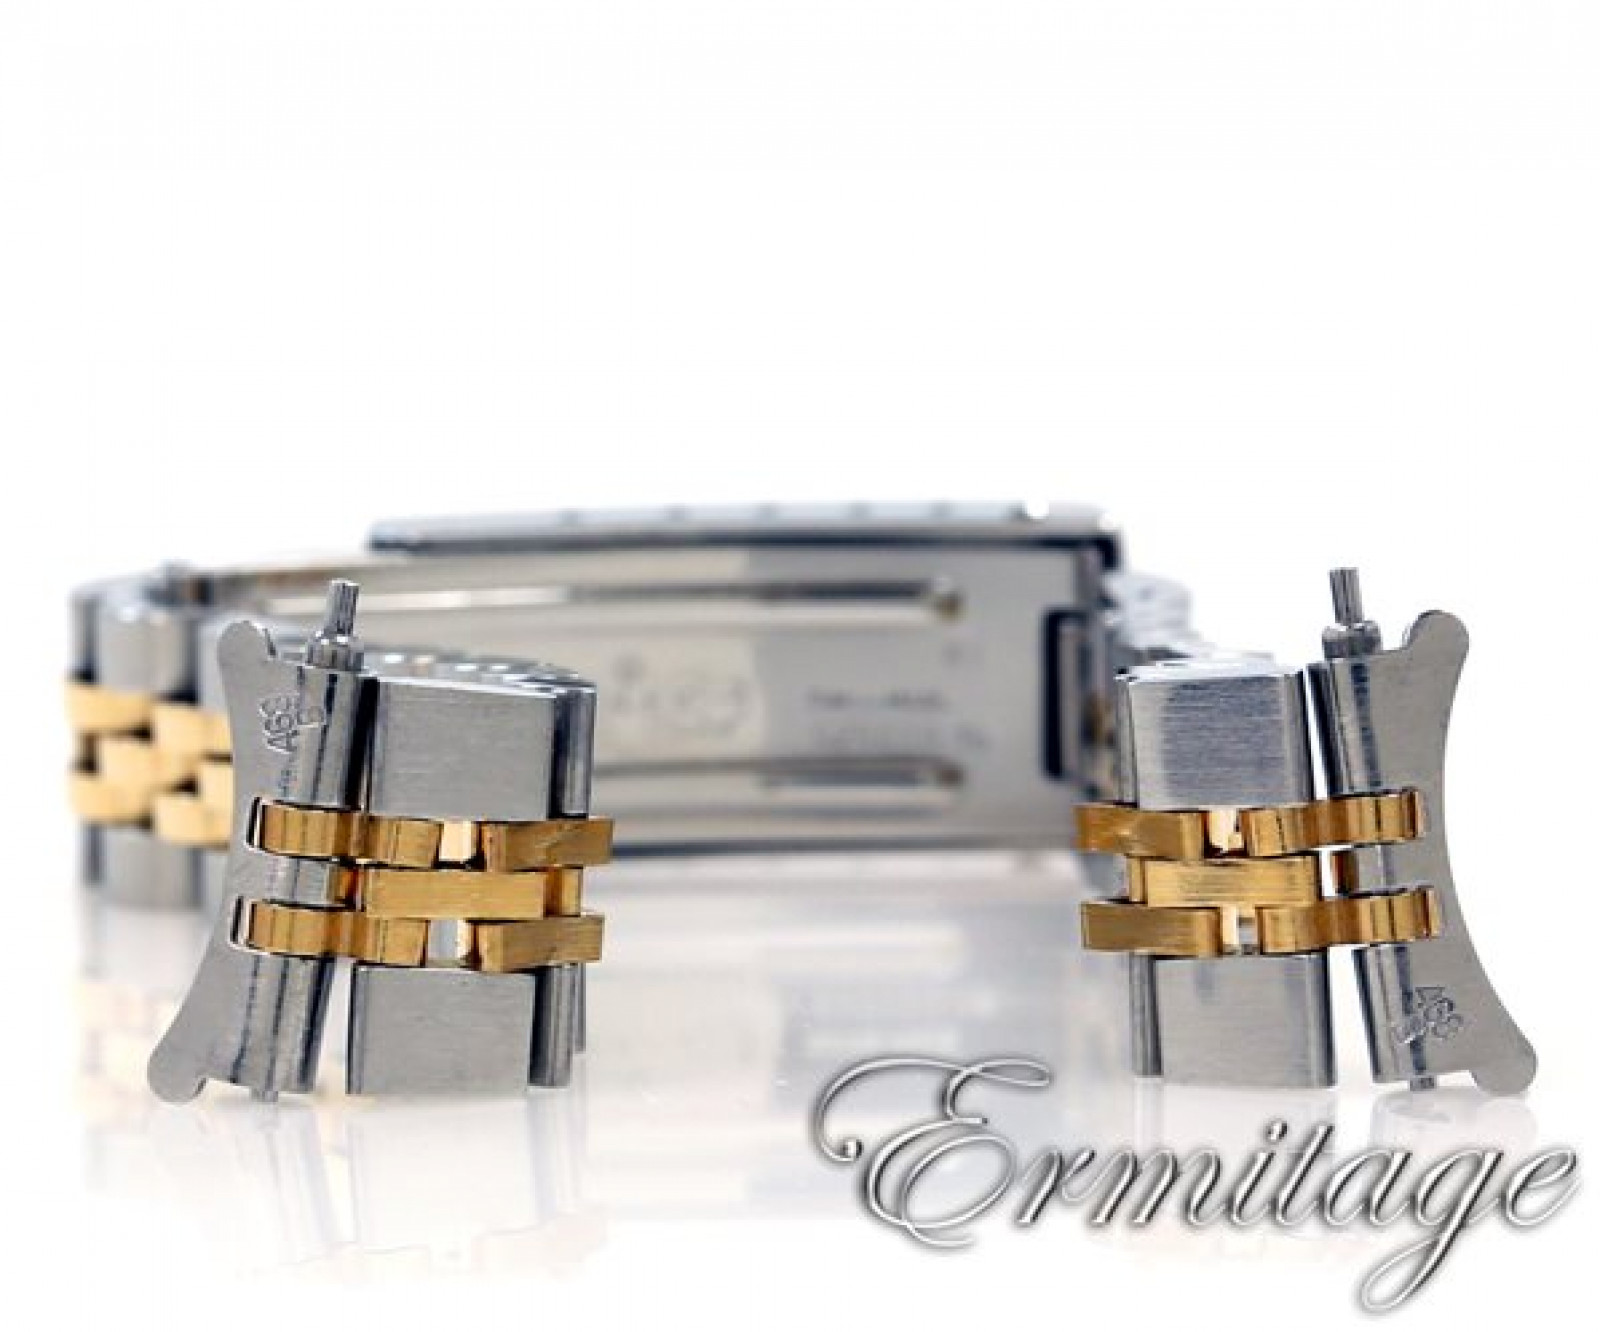 Diamond Rolex Datejust 69173 Gold & Steel